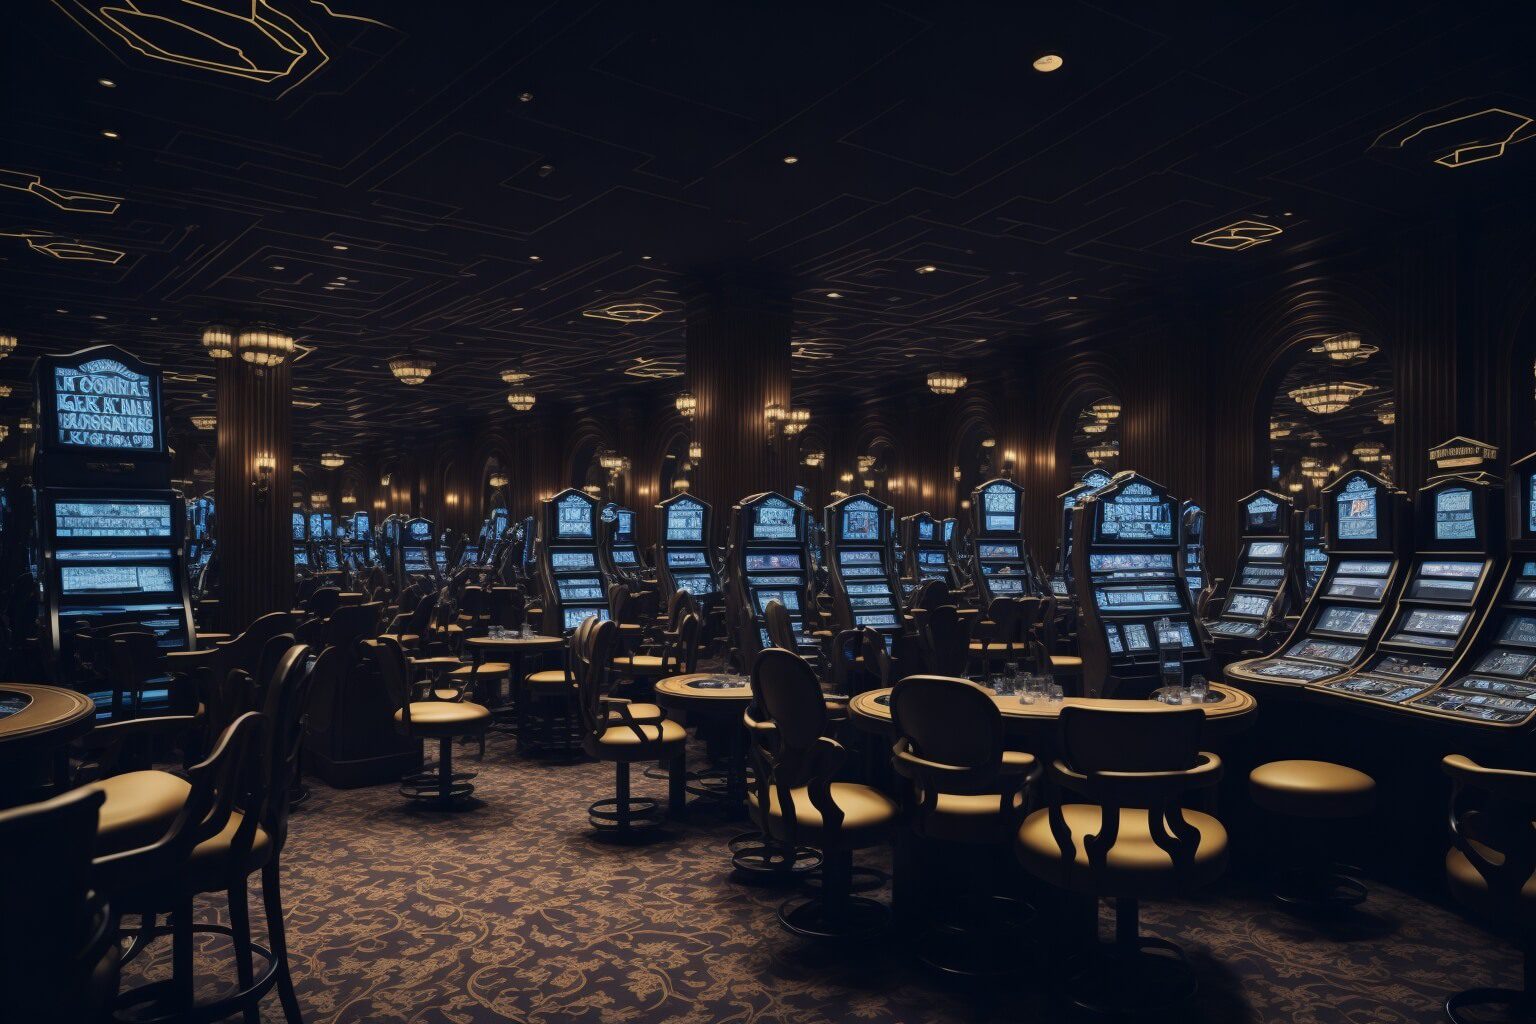 image to image 20 Leonardo Diffusion interior of a casino specifically focusing 0